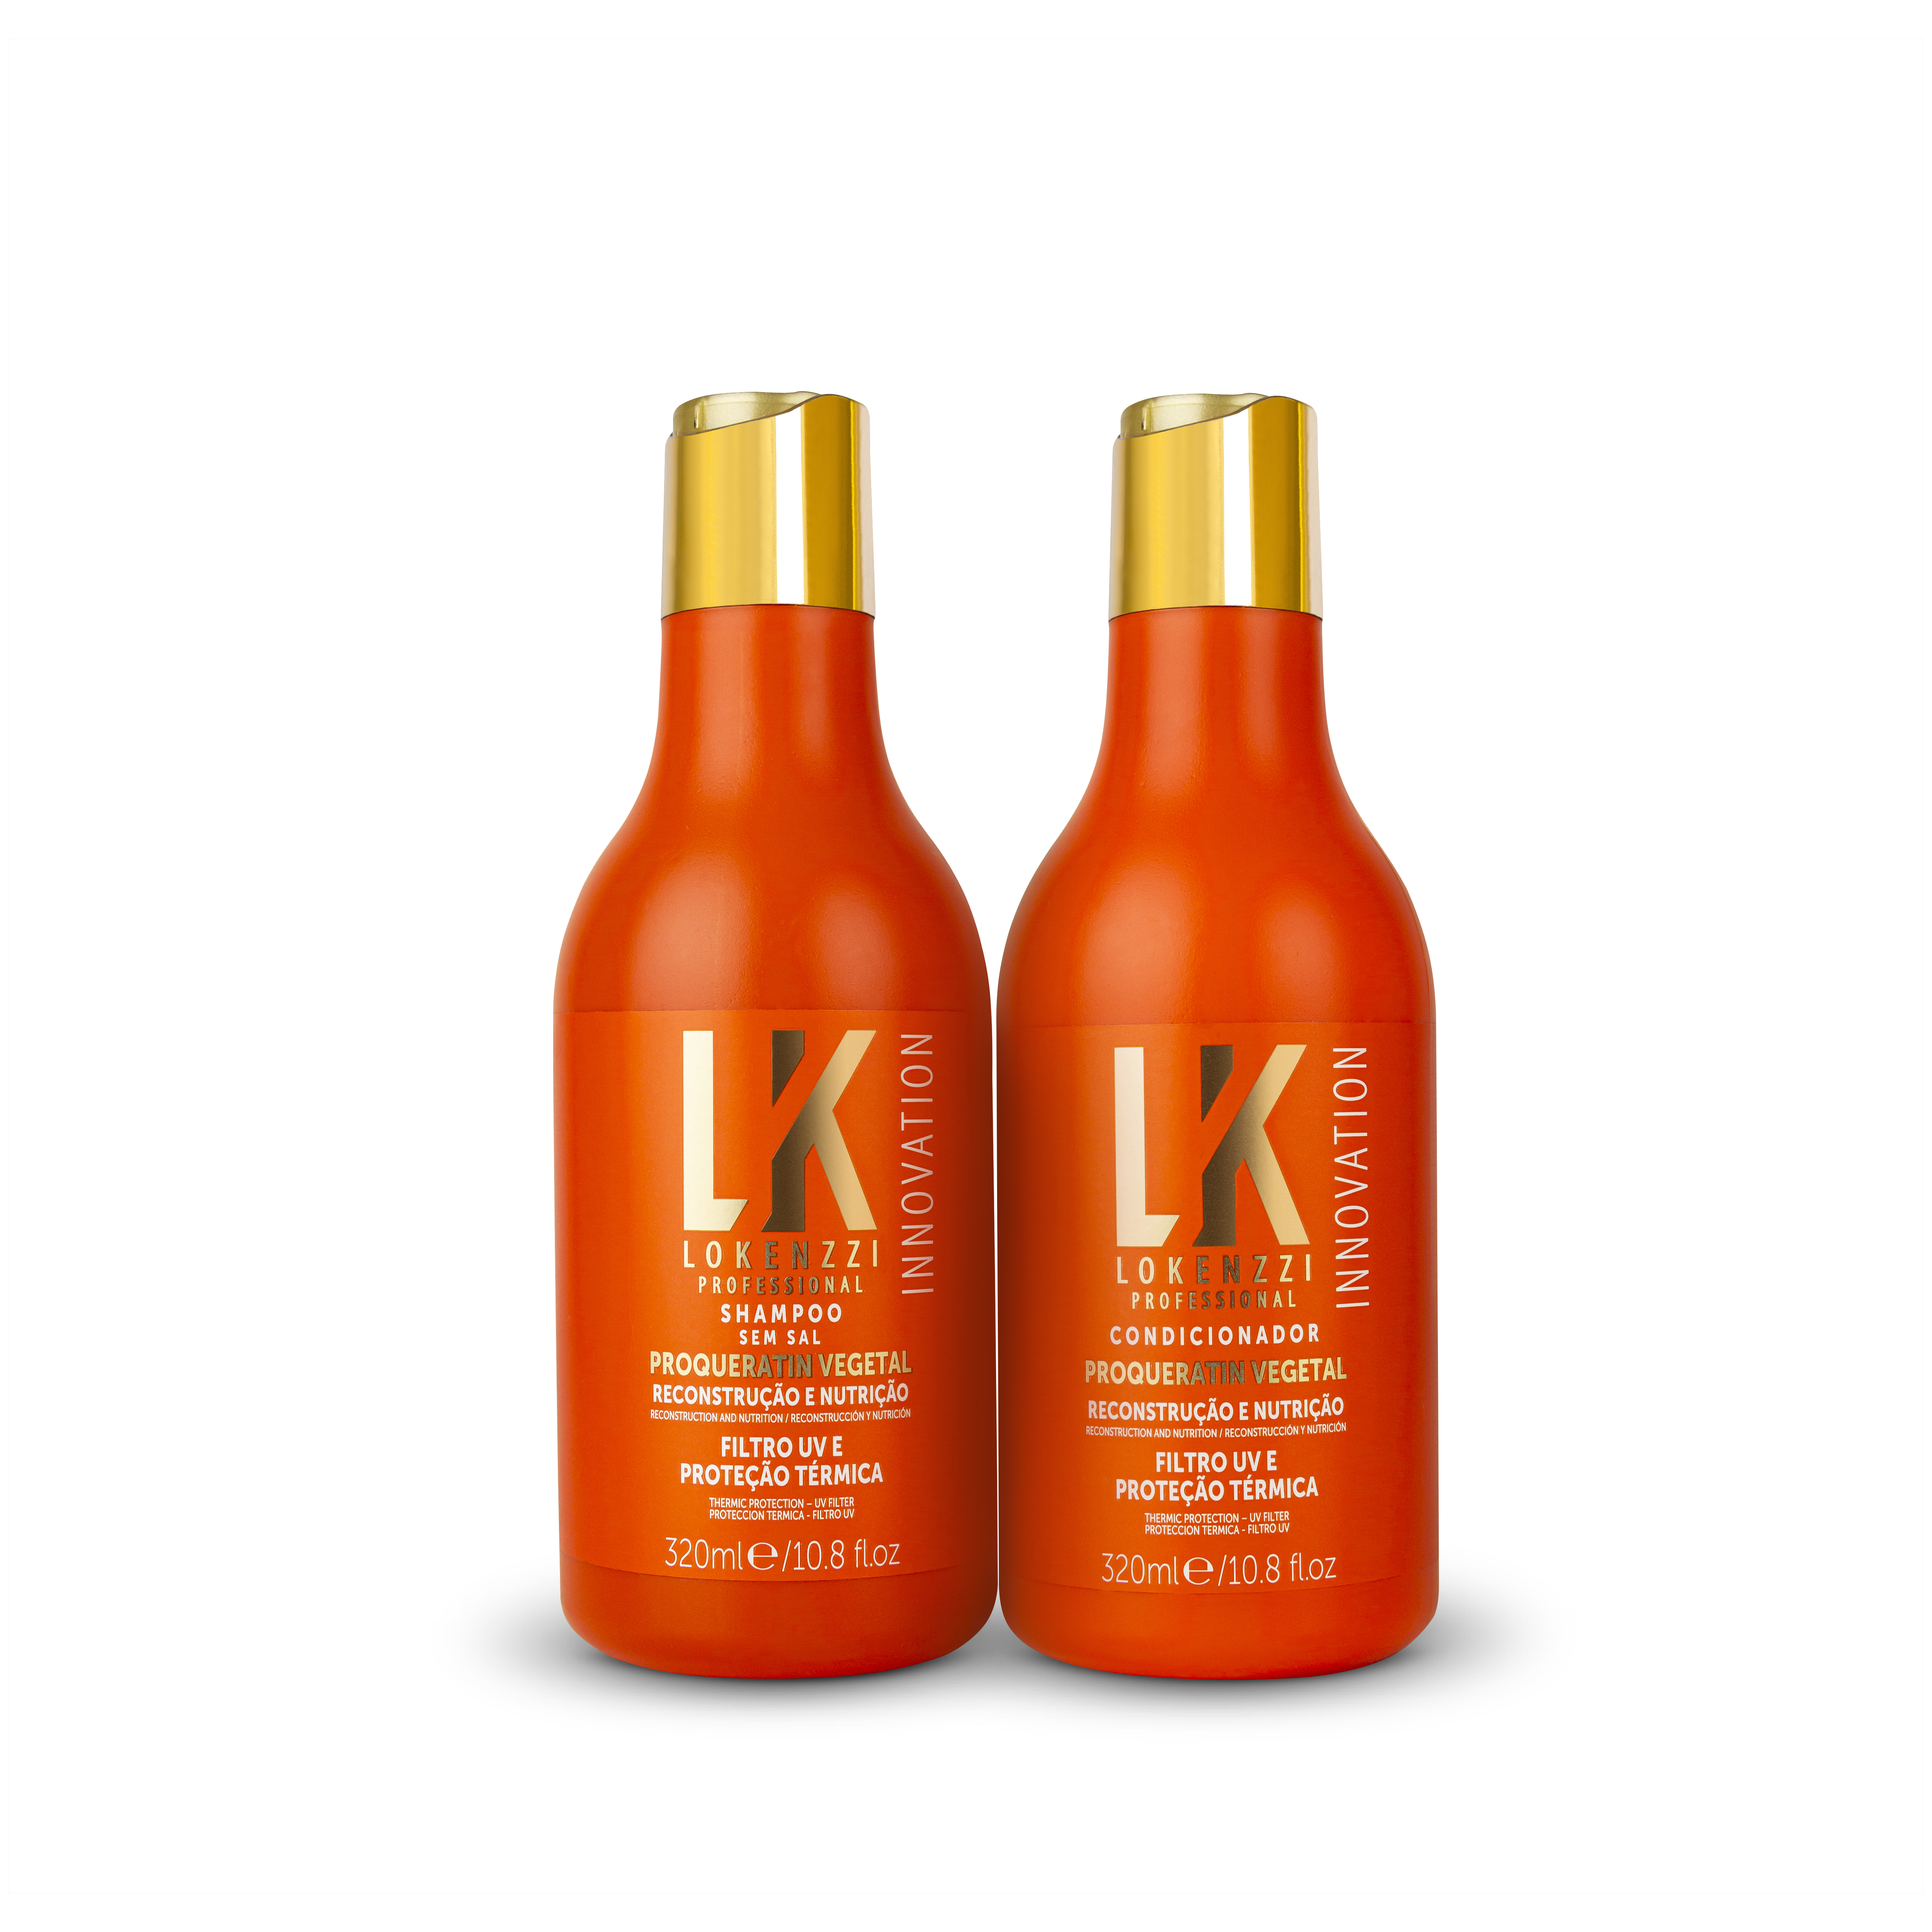 Shampoo Vegano Para Cabelos Mistos Lokenzzi 320ml – Lokenzzi Professional